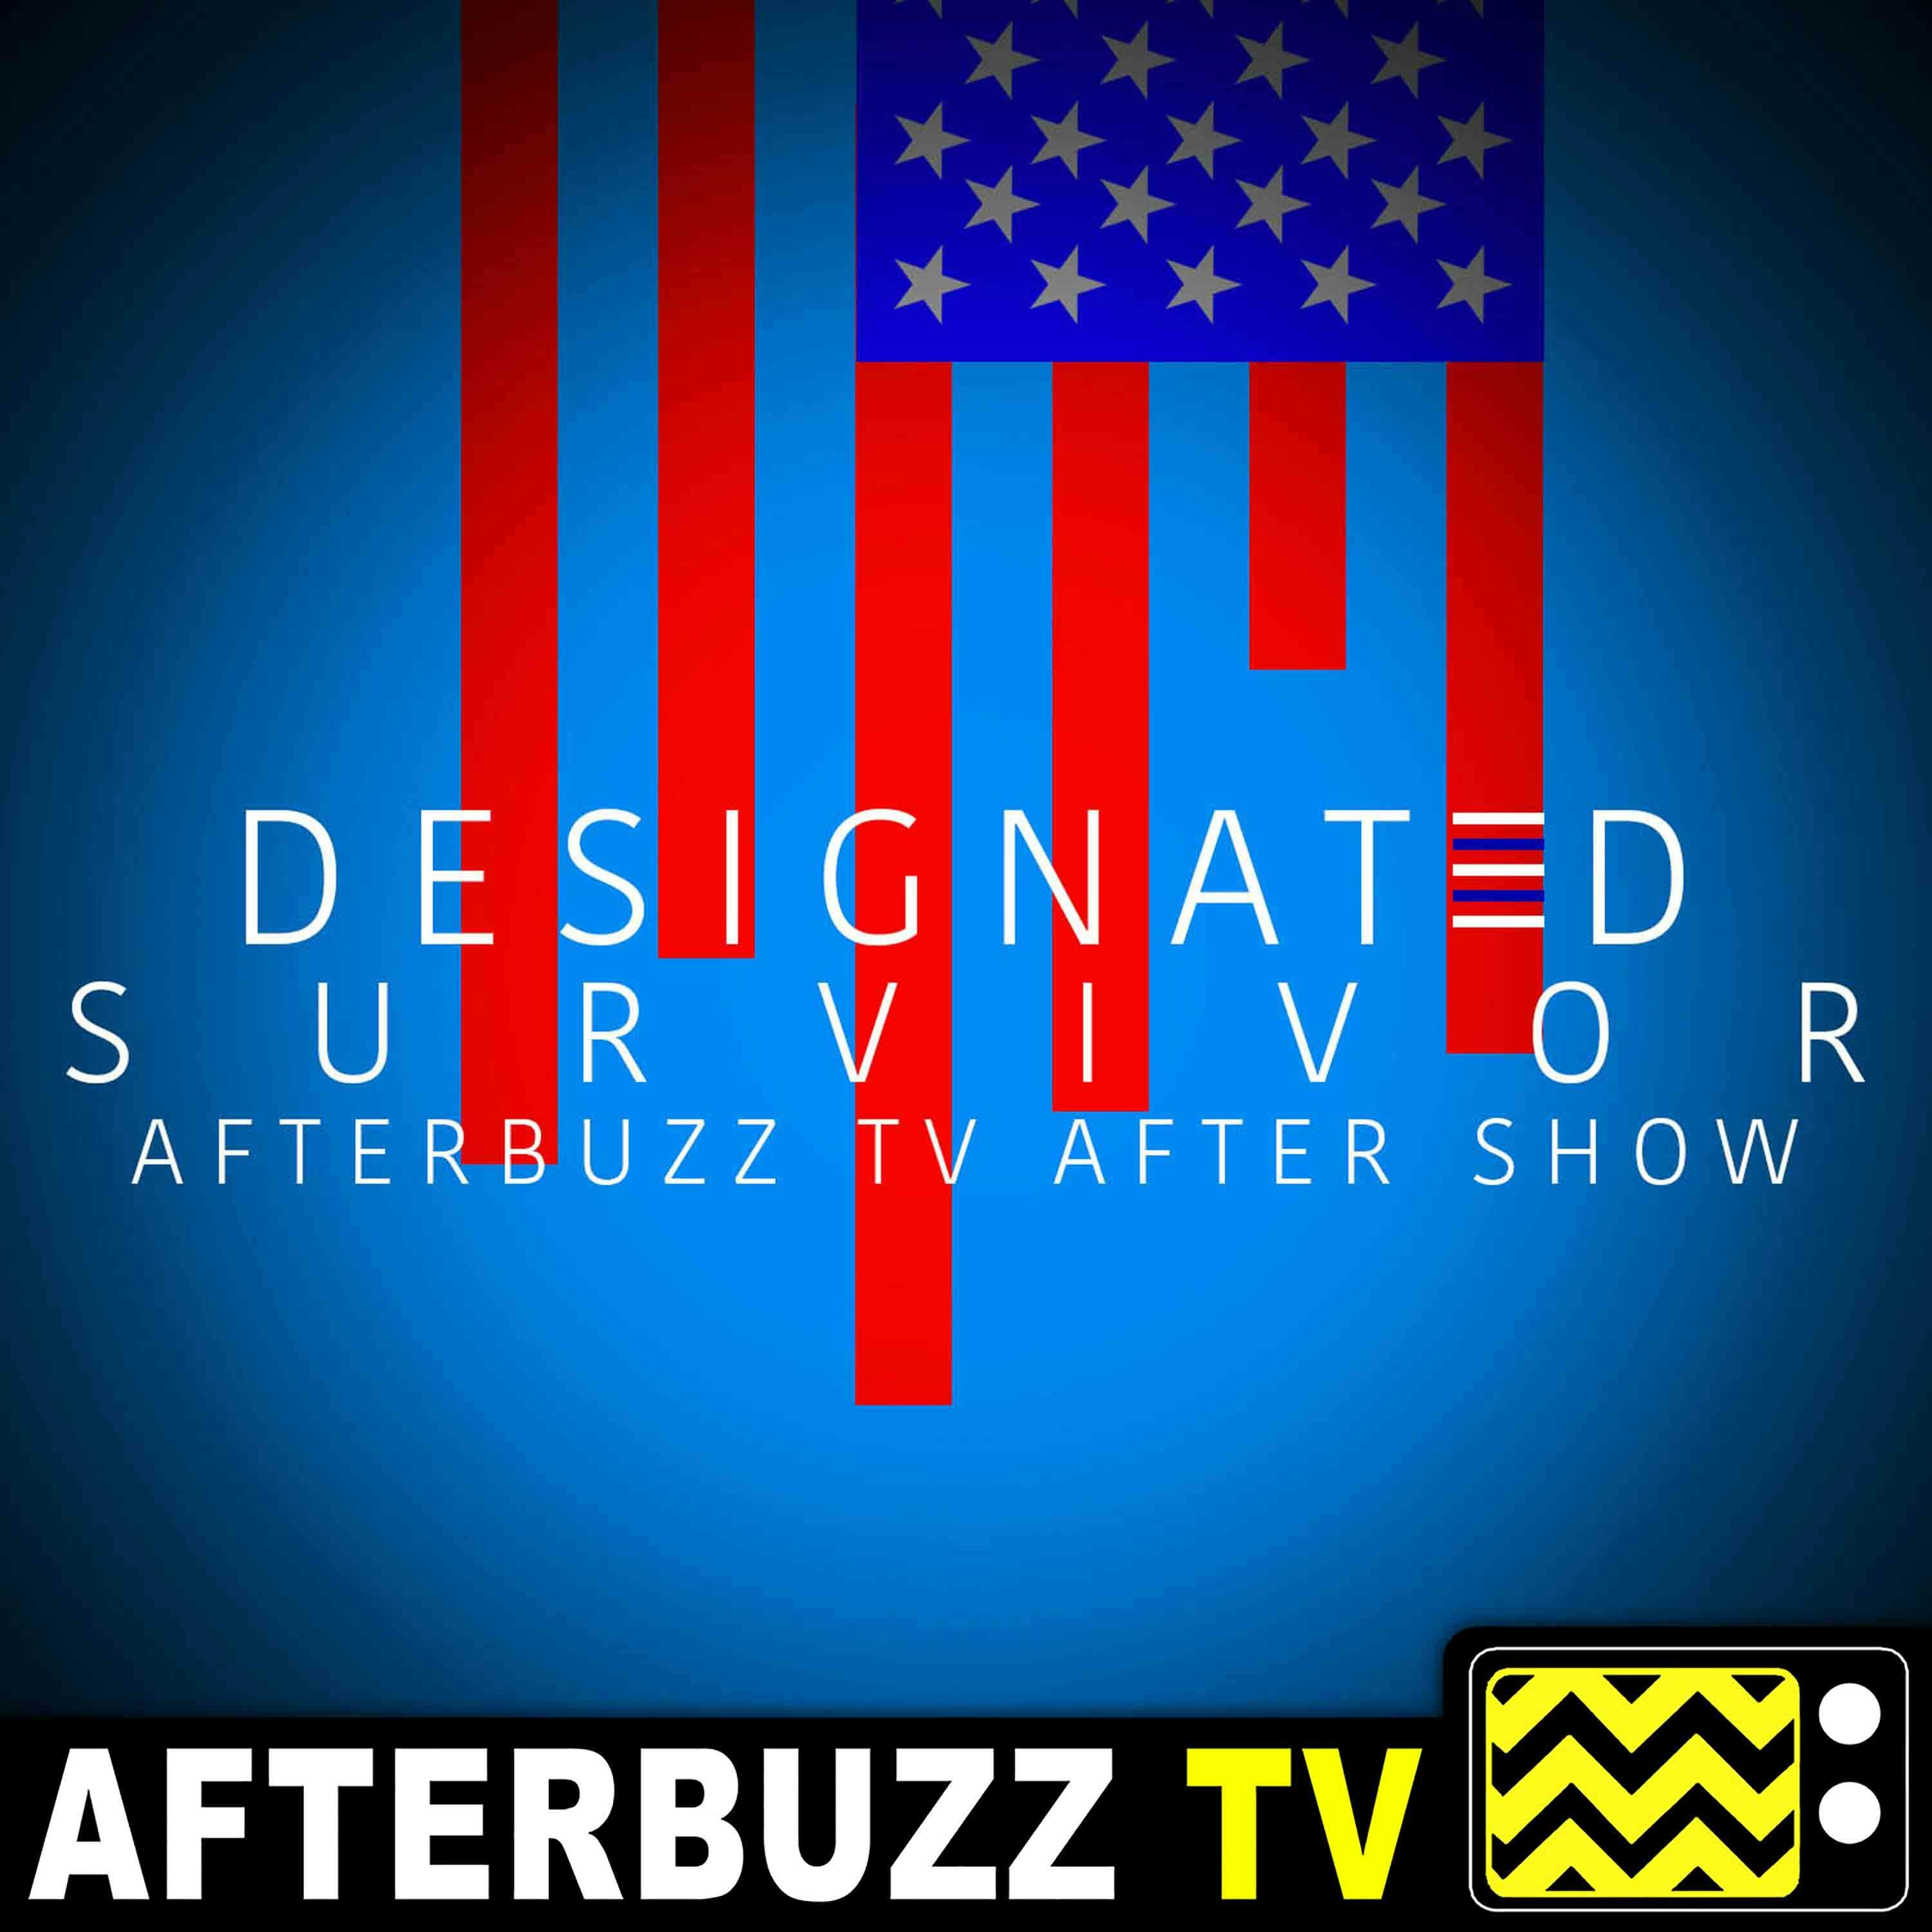 Designated Survivor S:1 | Misalliance E:19 | AfterBuzz TV AfterShow